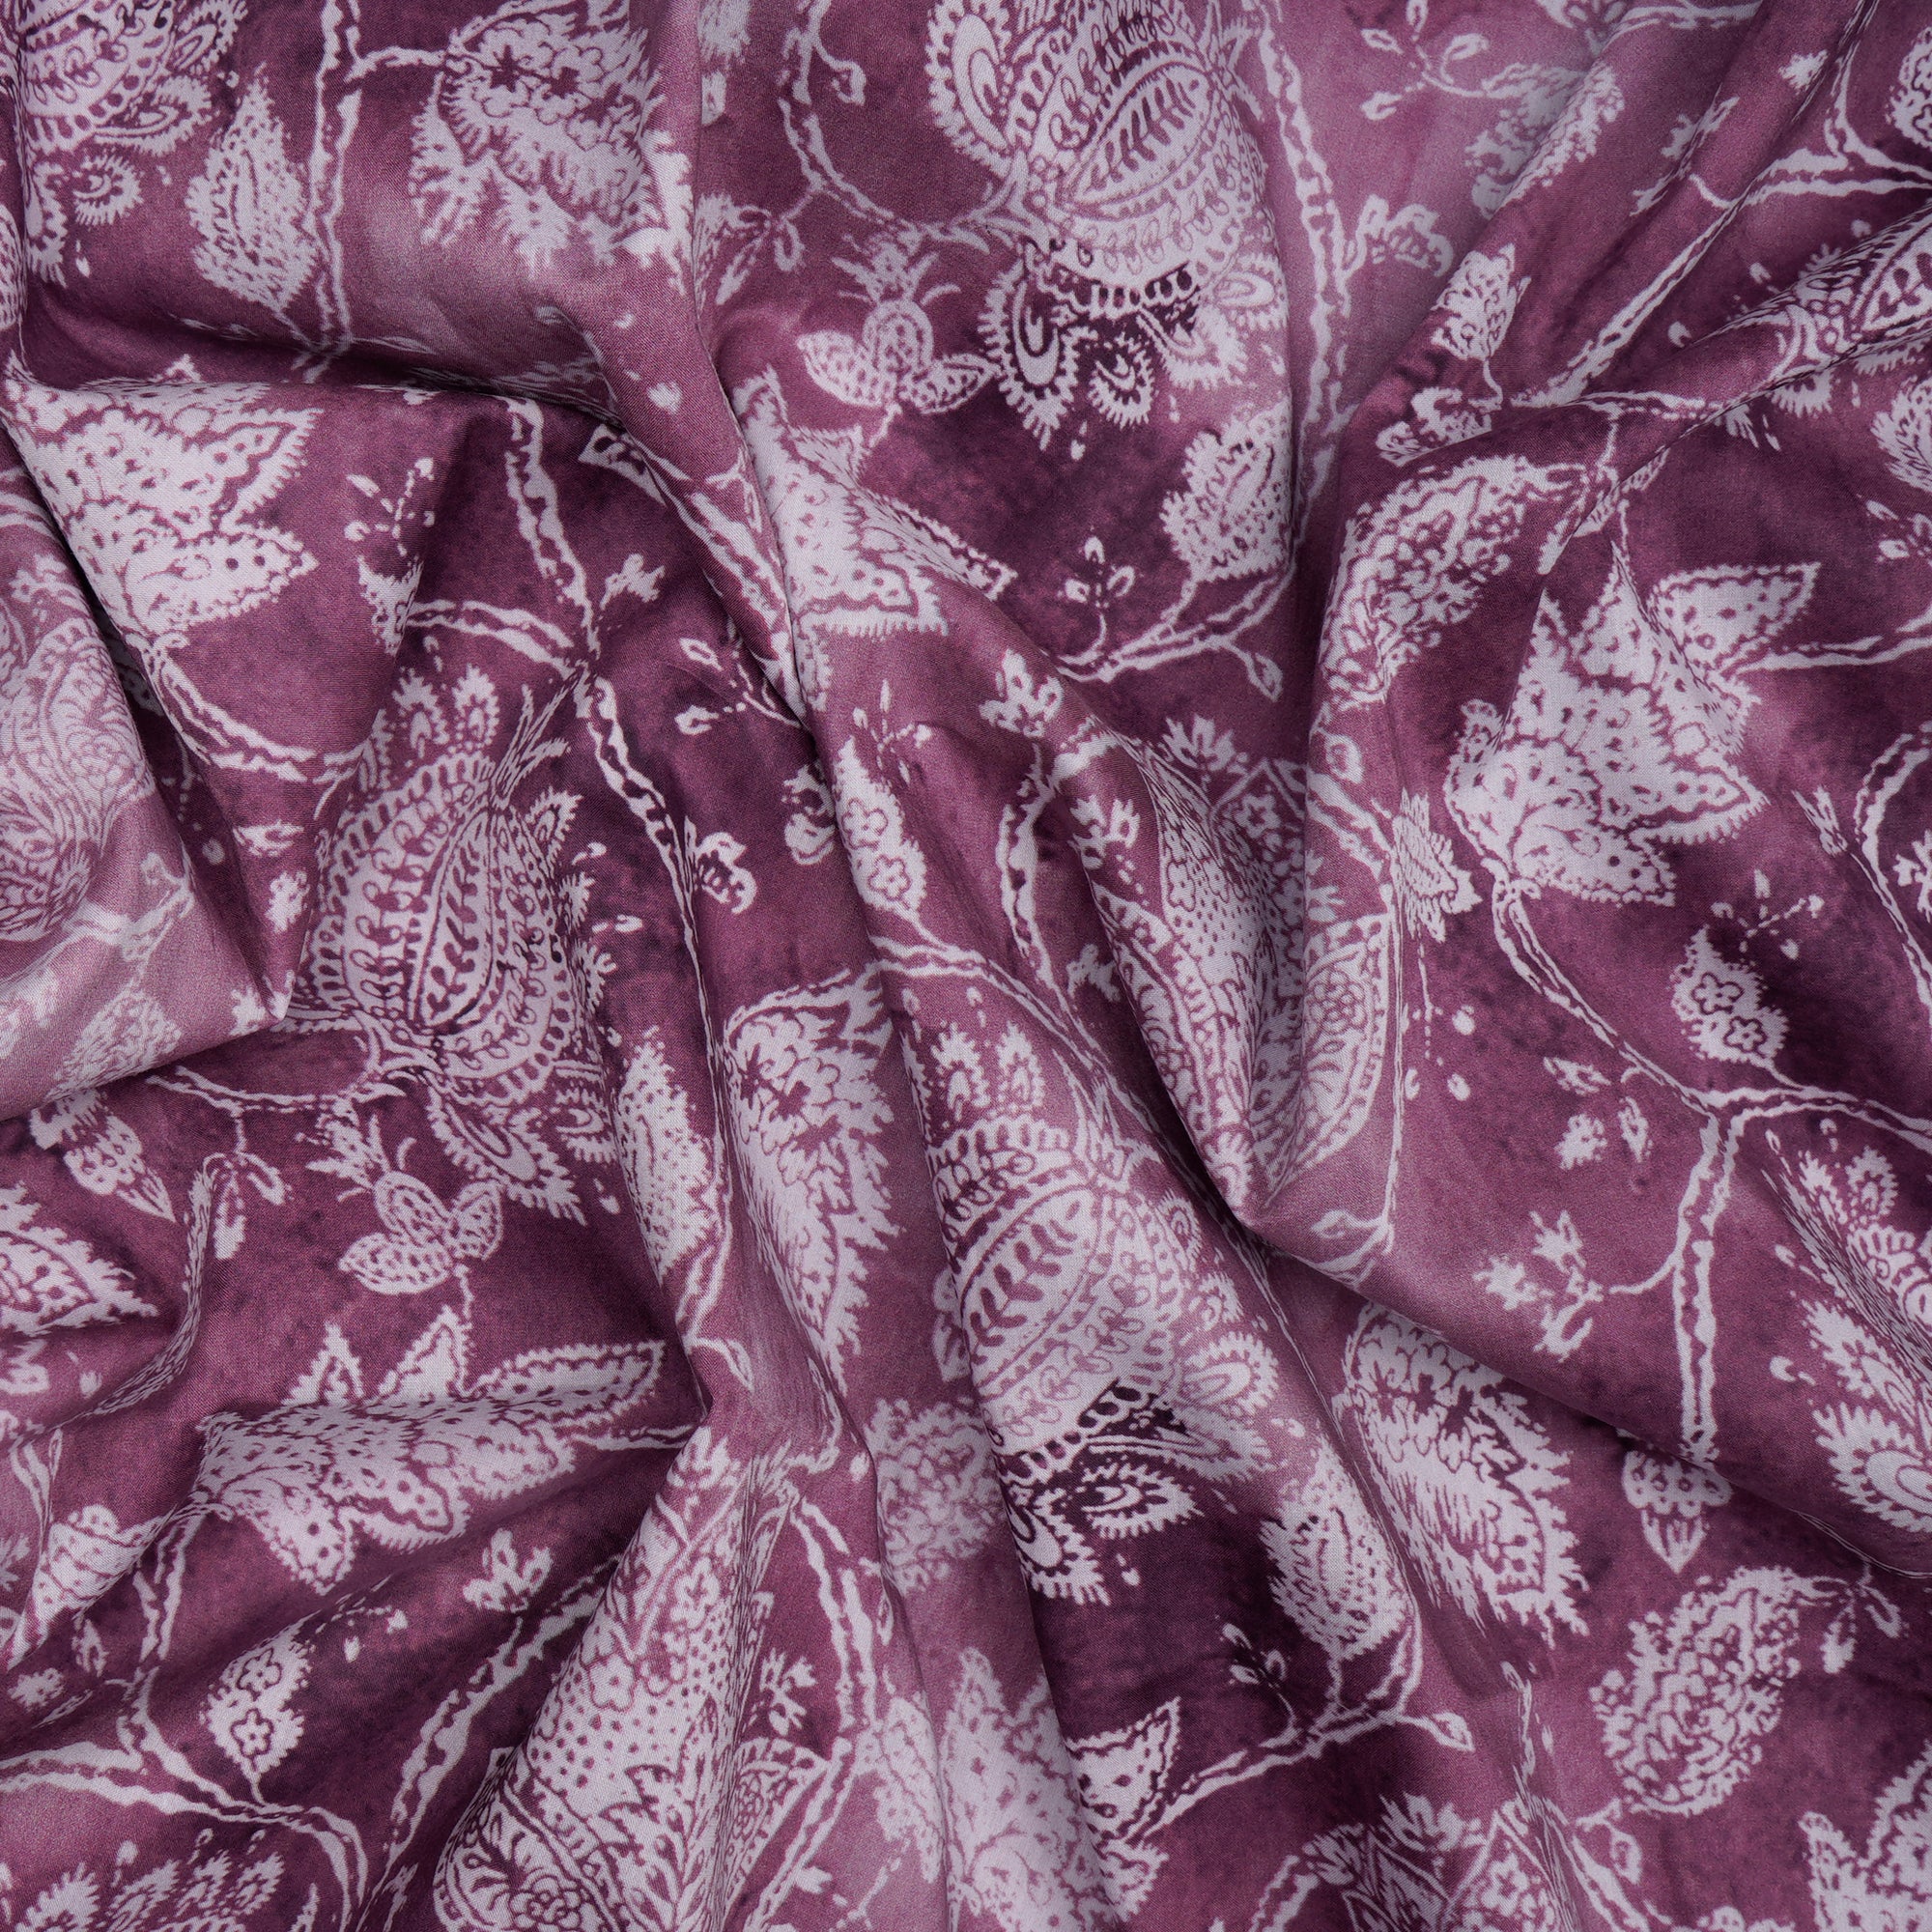 Bordeaux Floral Pattern Digital Print Lawn Fabric